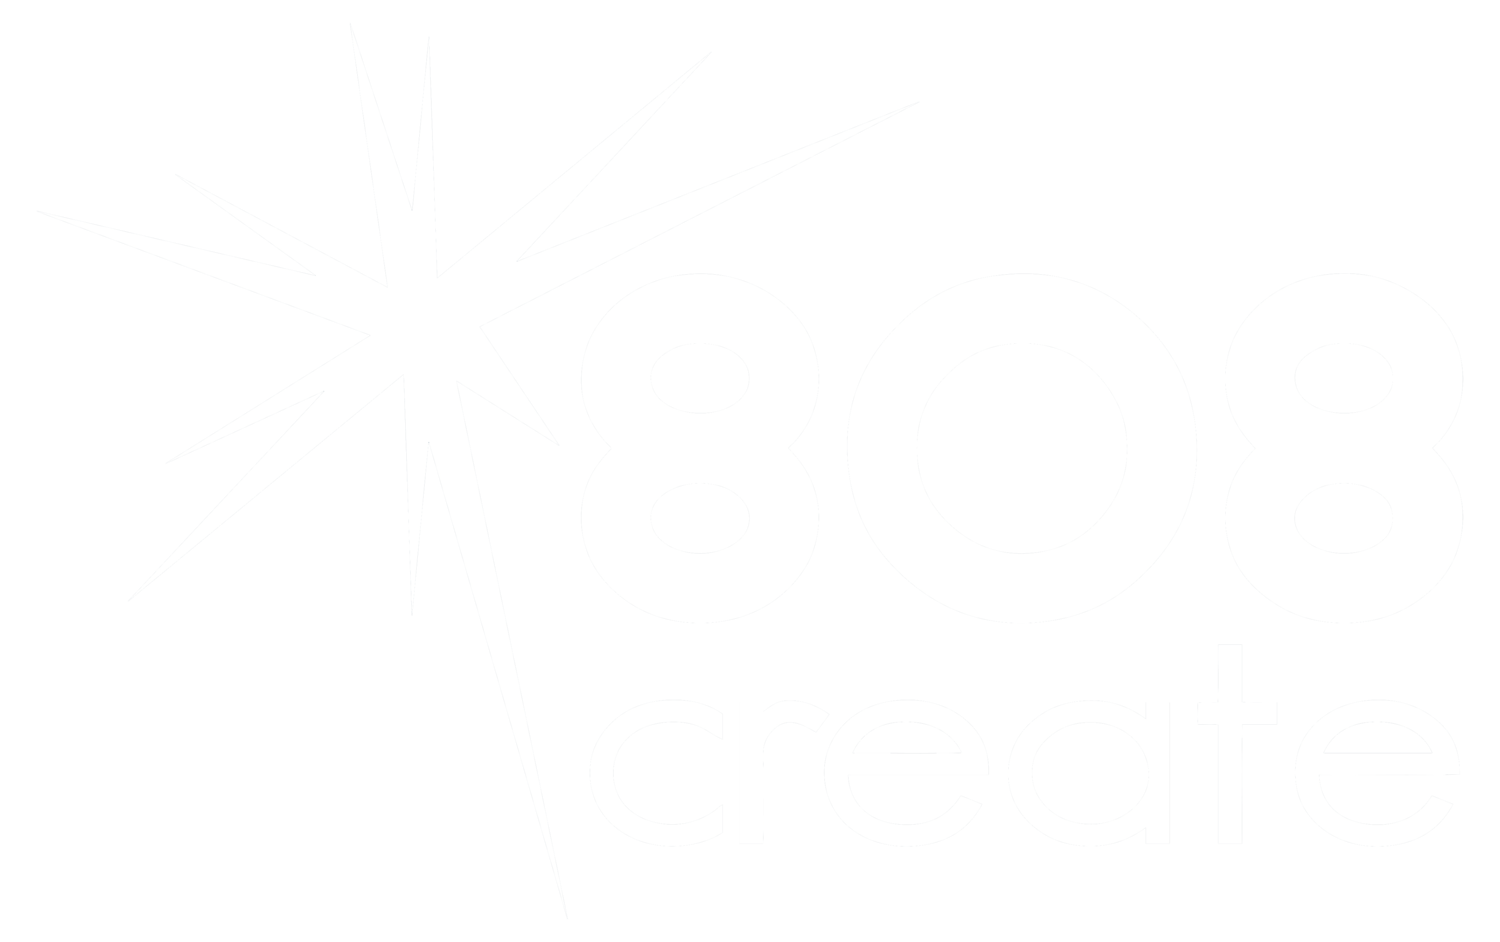 808 Create Ltd.